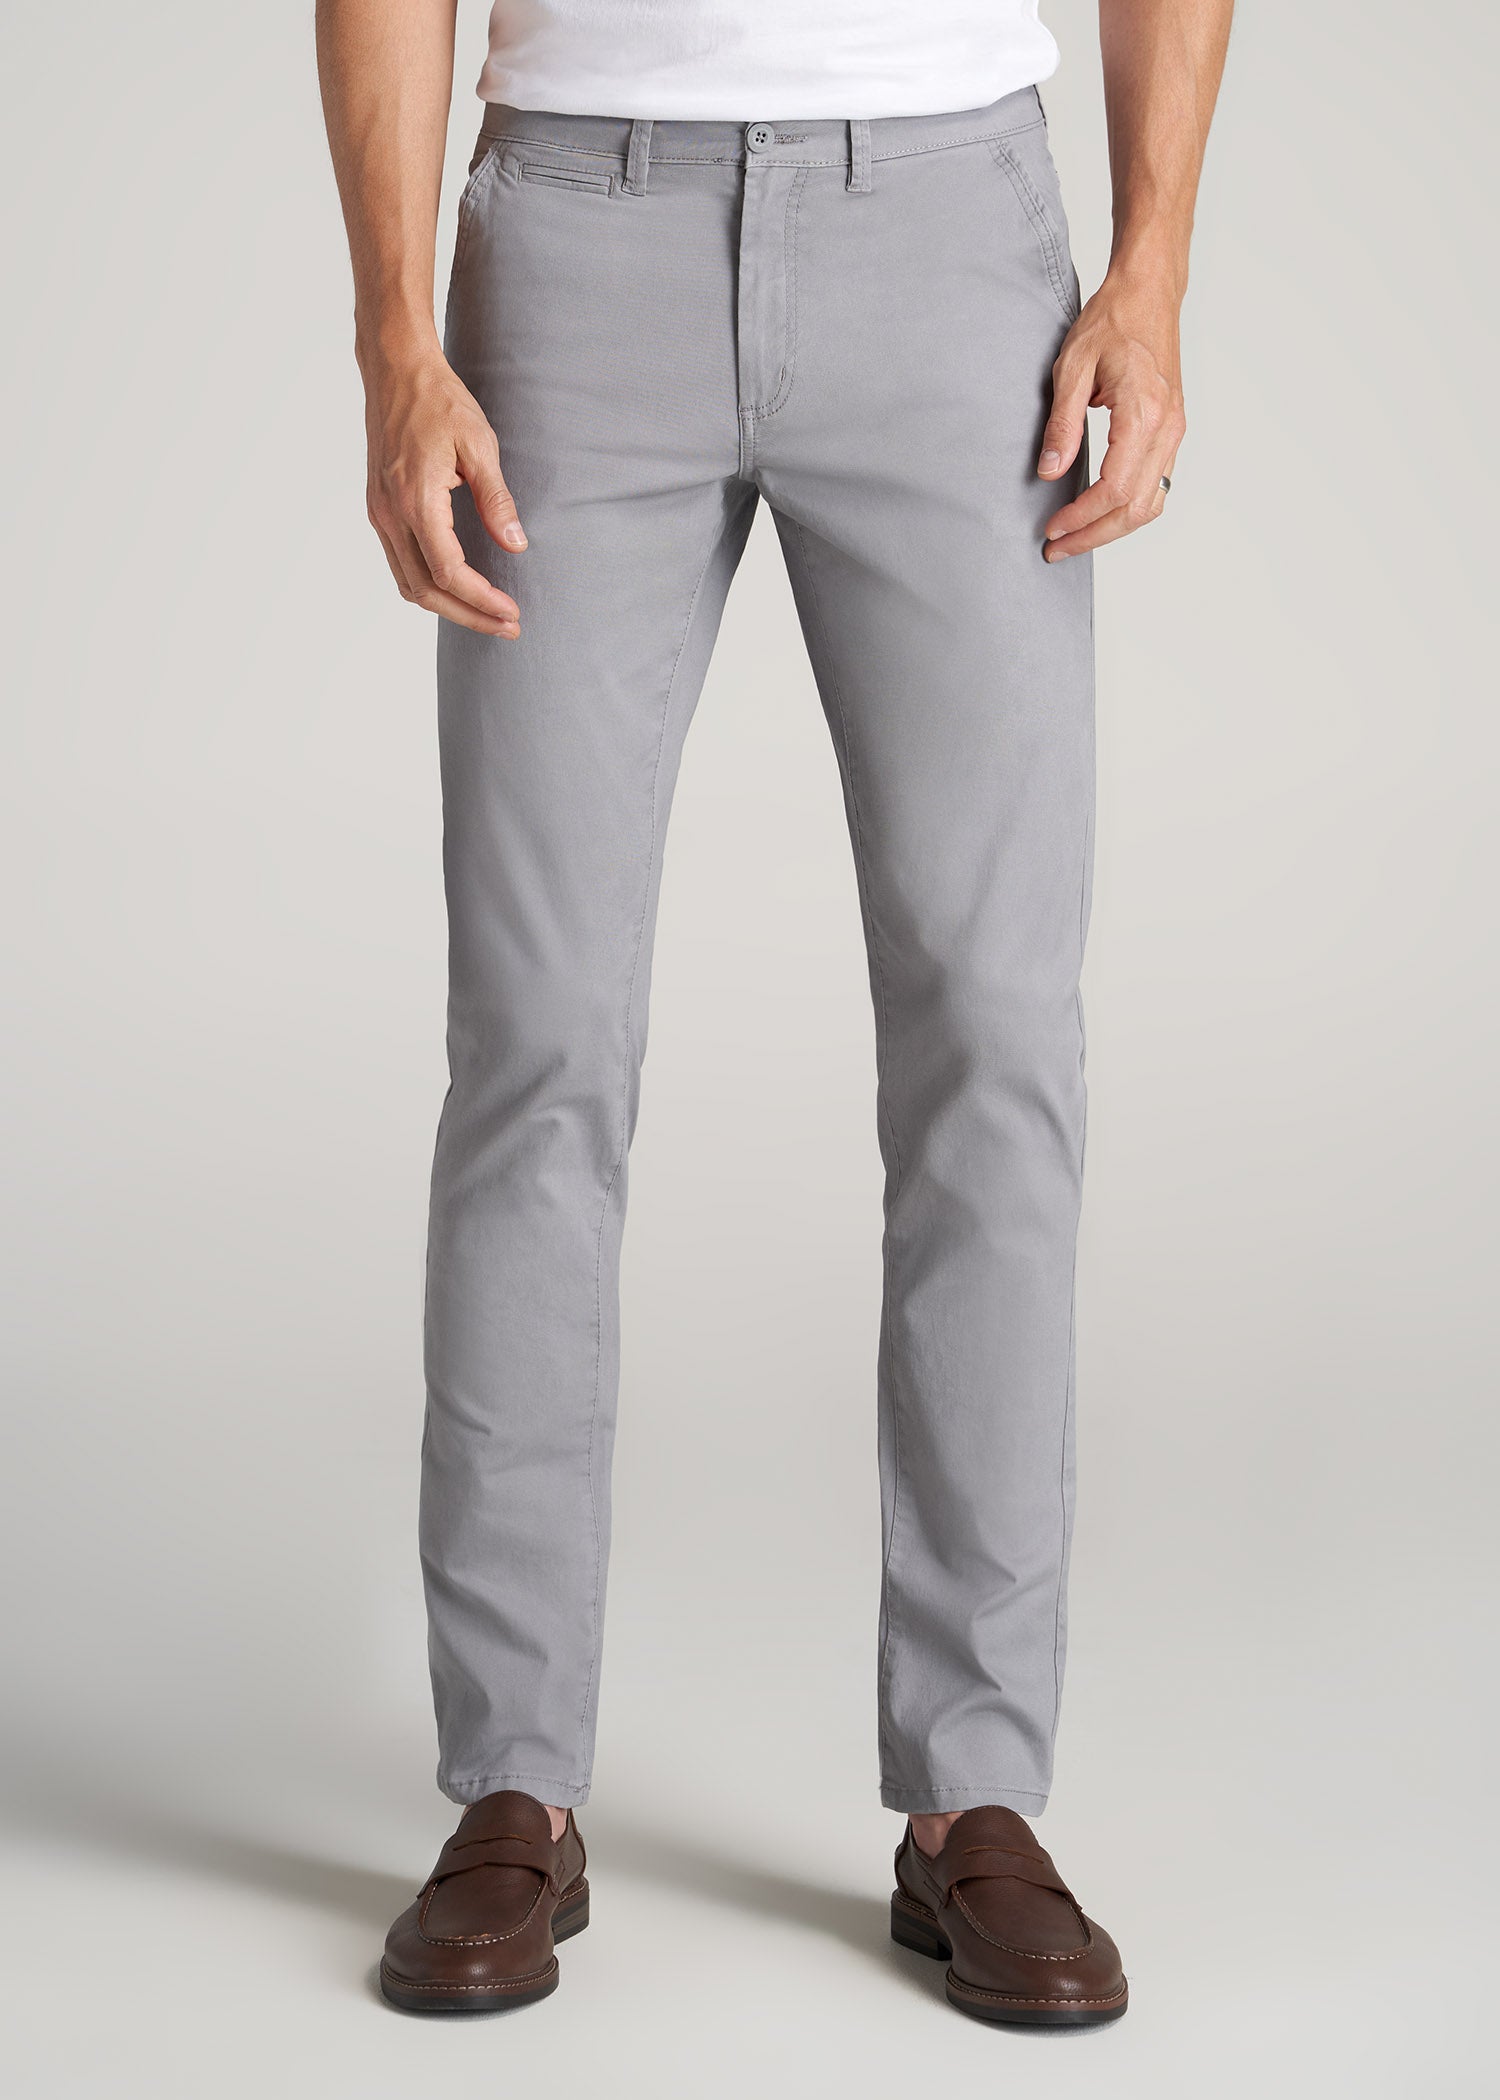 Gray Blazer with Light Gray Chino Pants